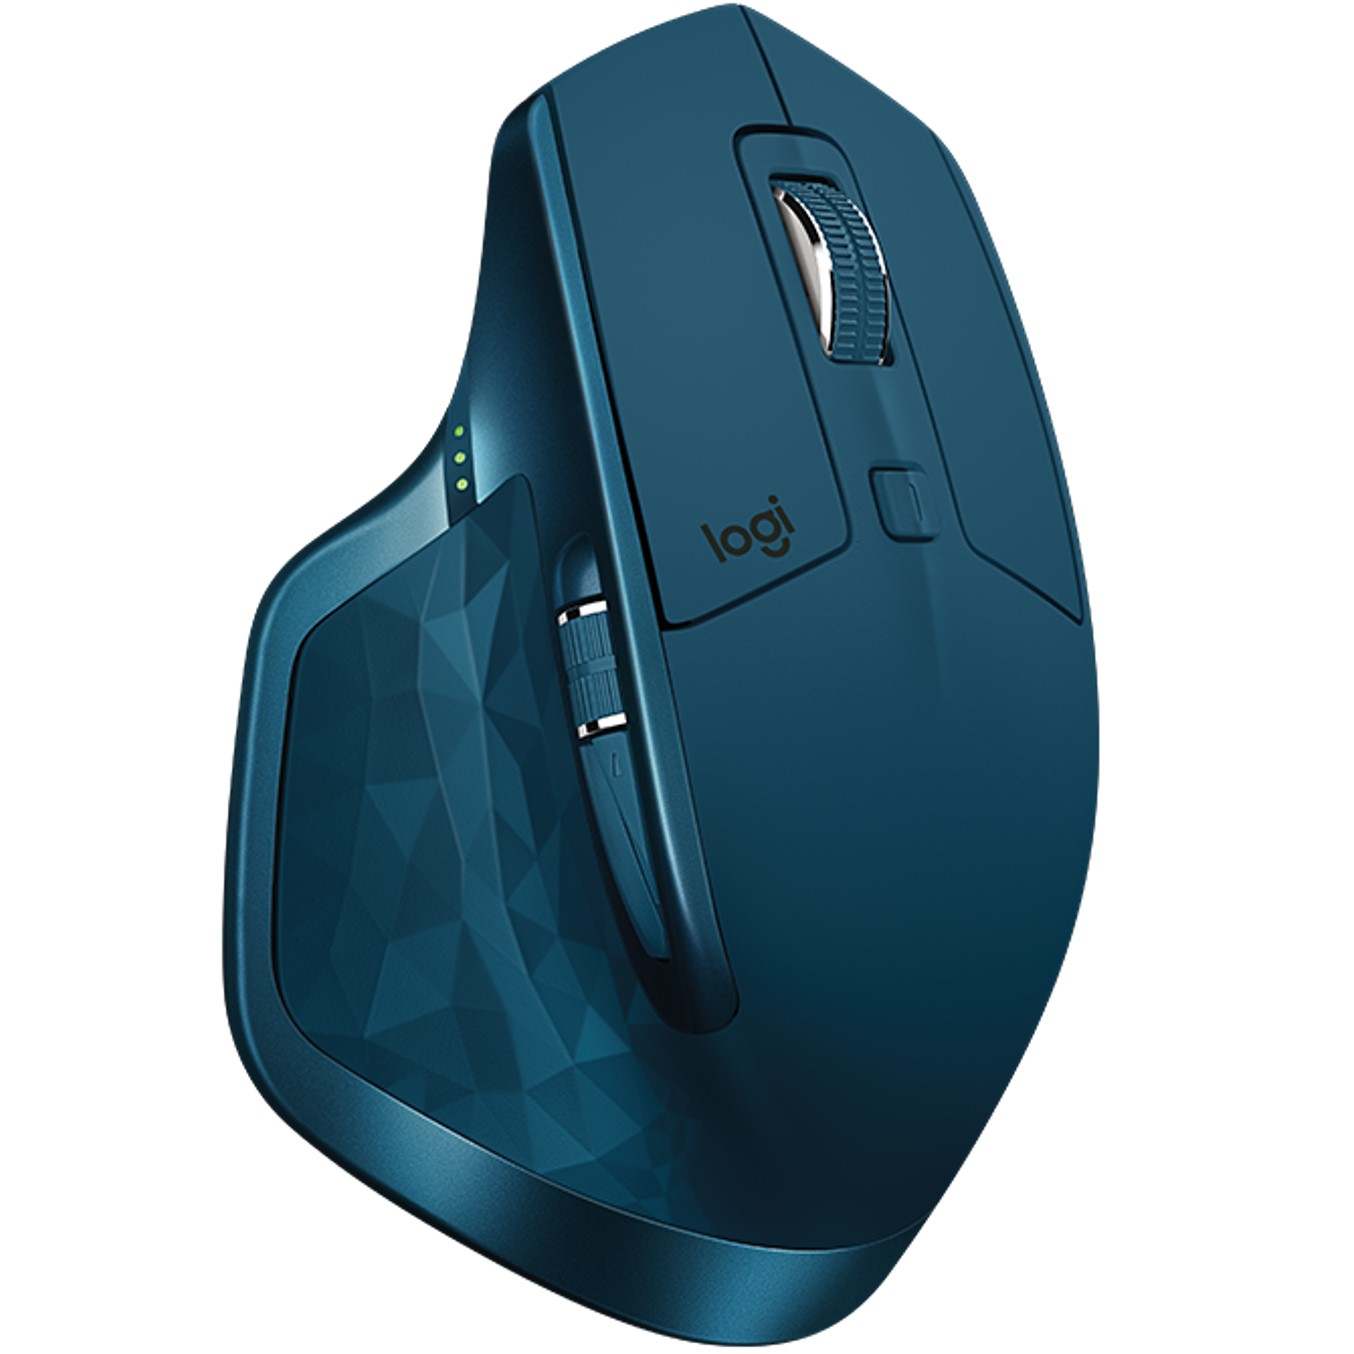 Mouse raton logitech mx master 2s wireless inalambrico verde azulado oscuro